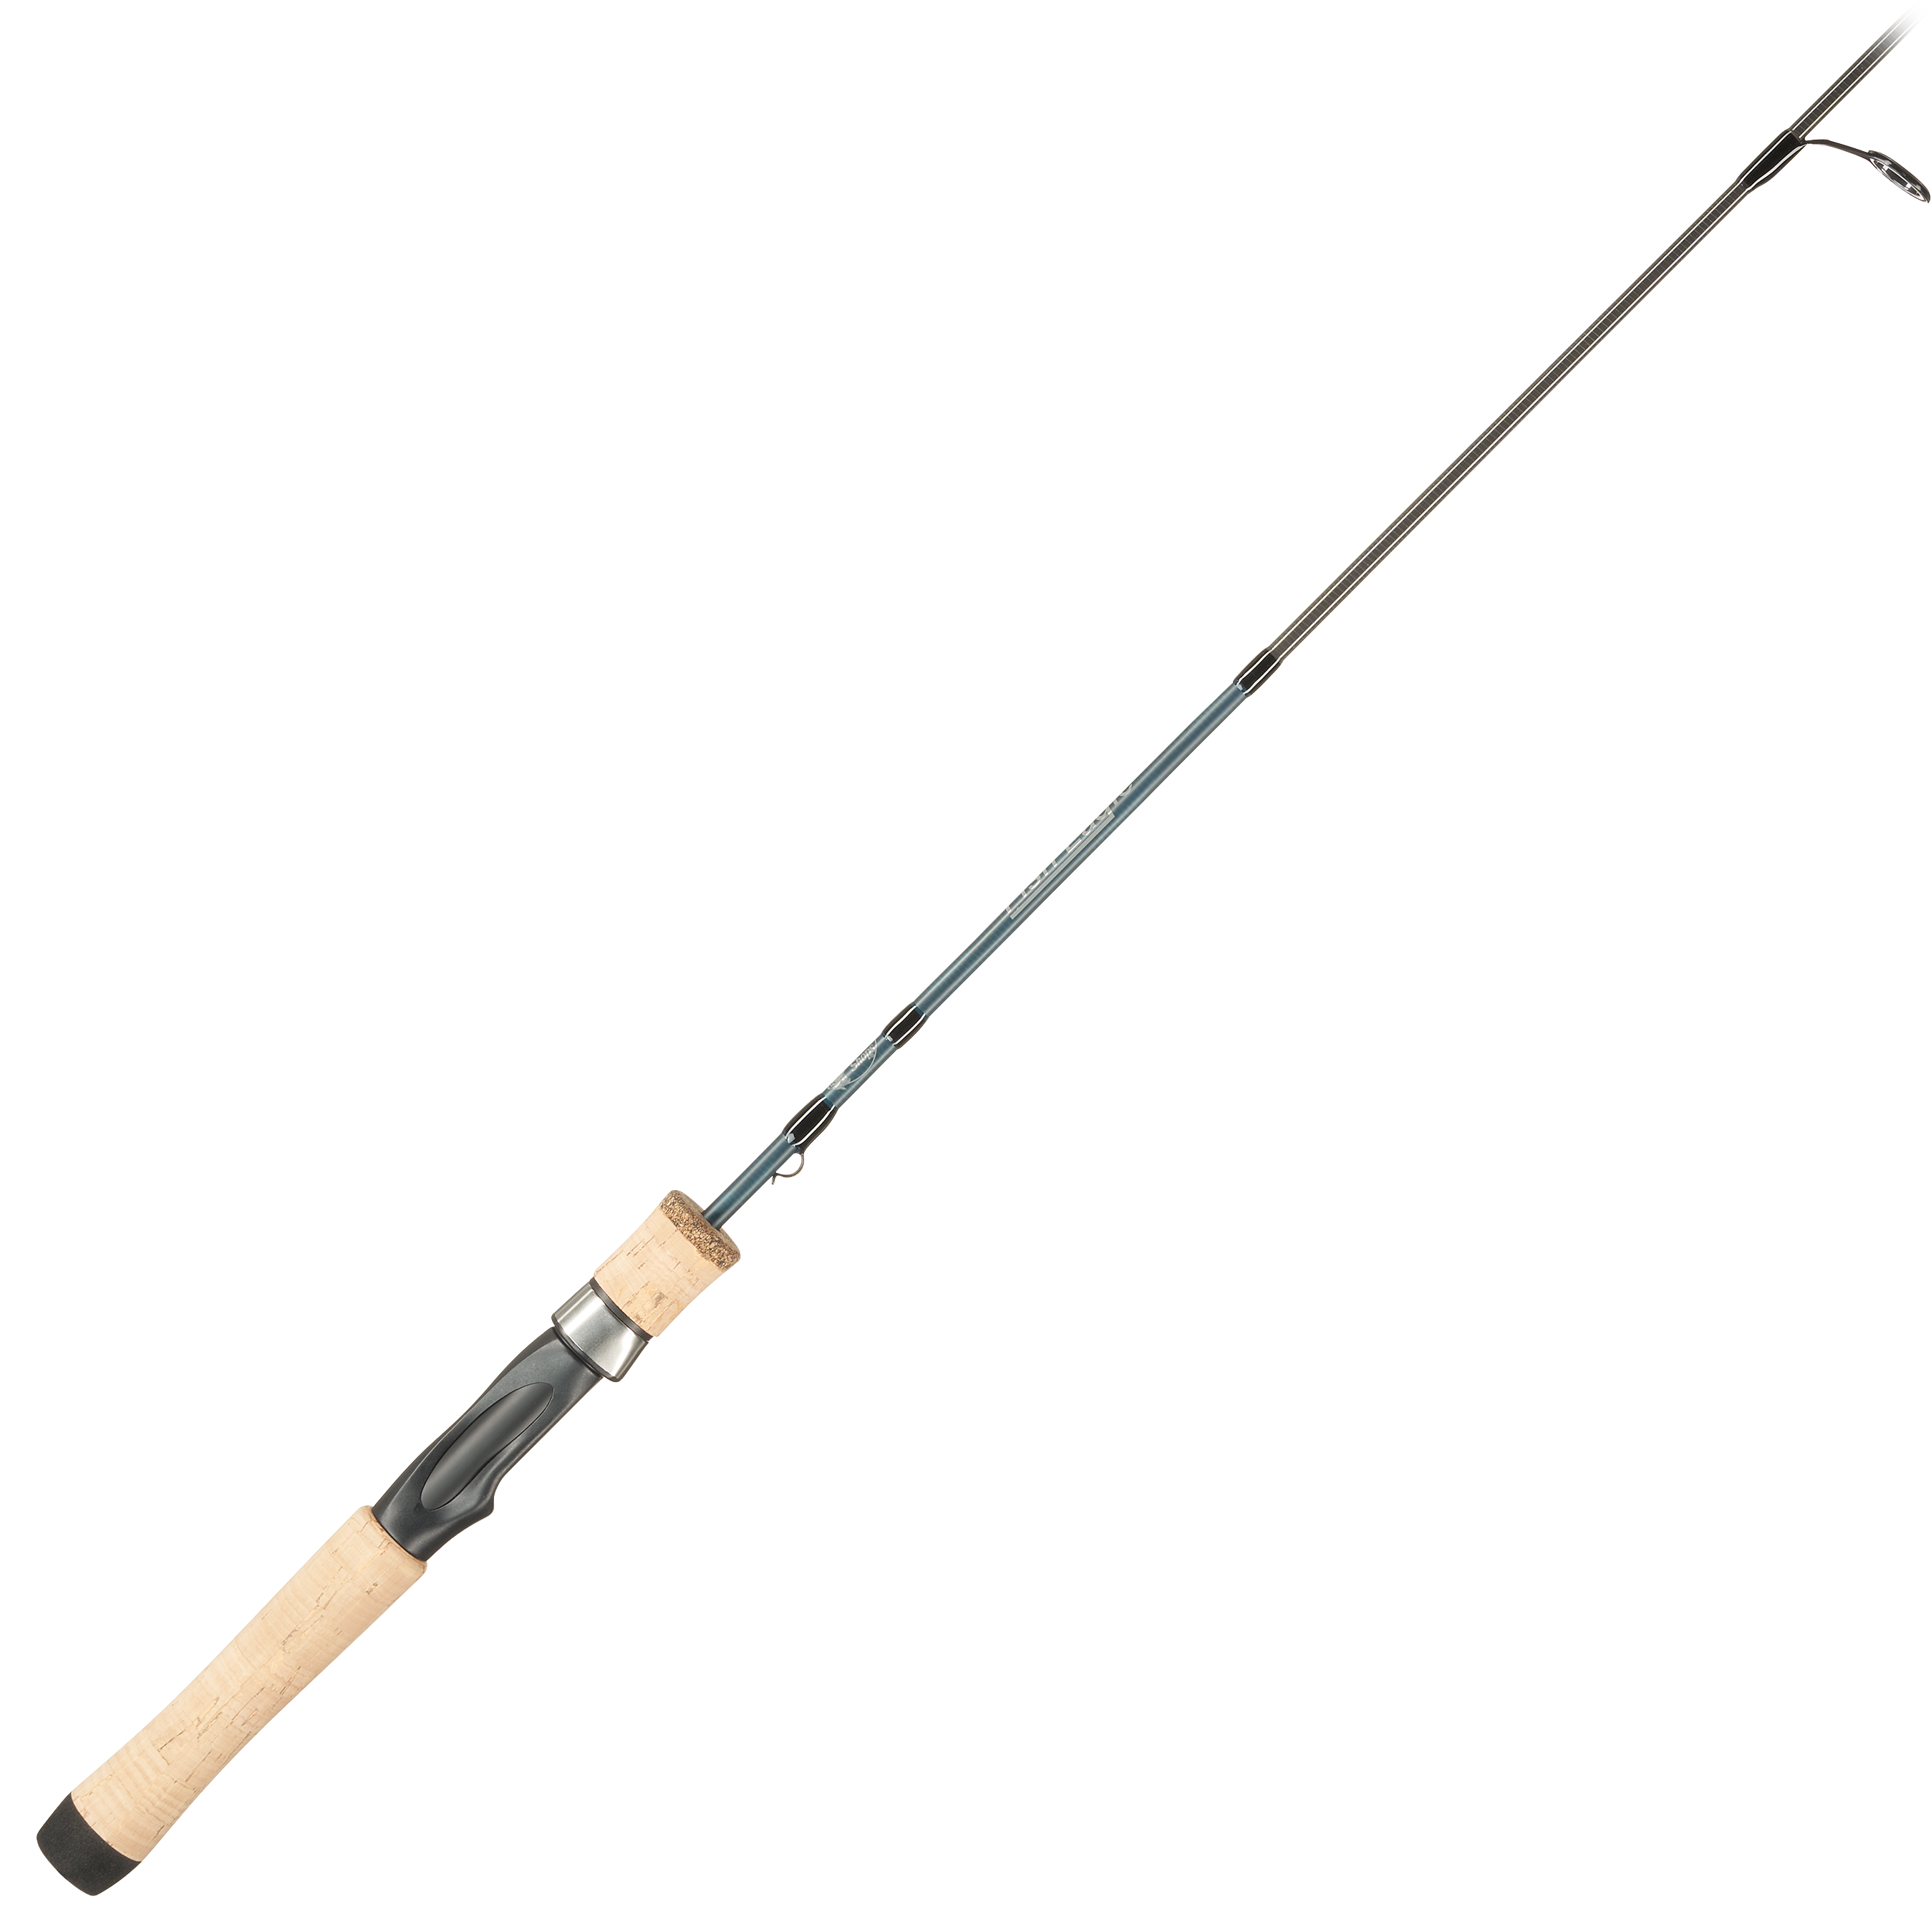 Bass Pro Shops Johnny Morris 7'0 Carbonlite 2.0 Baitcasting Rod/Reel Combo  - Sports & Outdoors - Tipton, Indiana